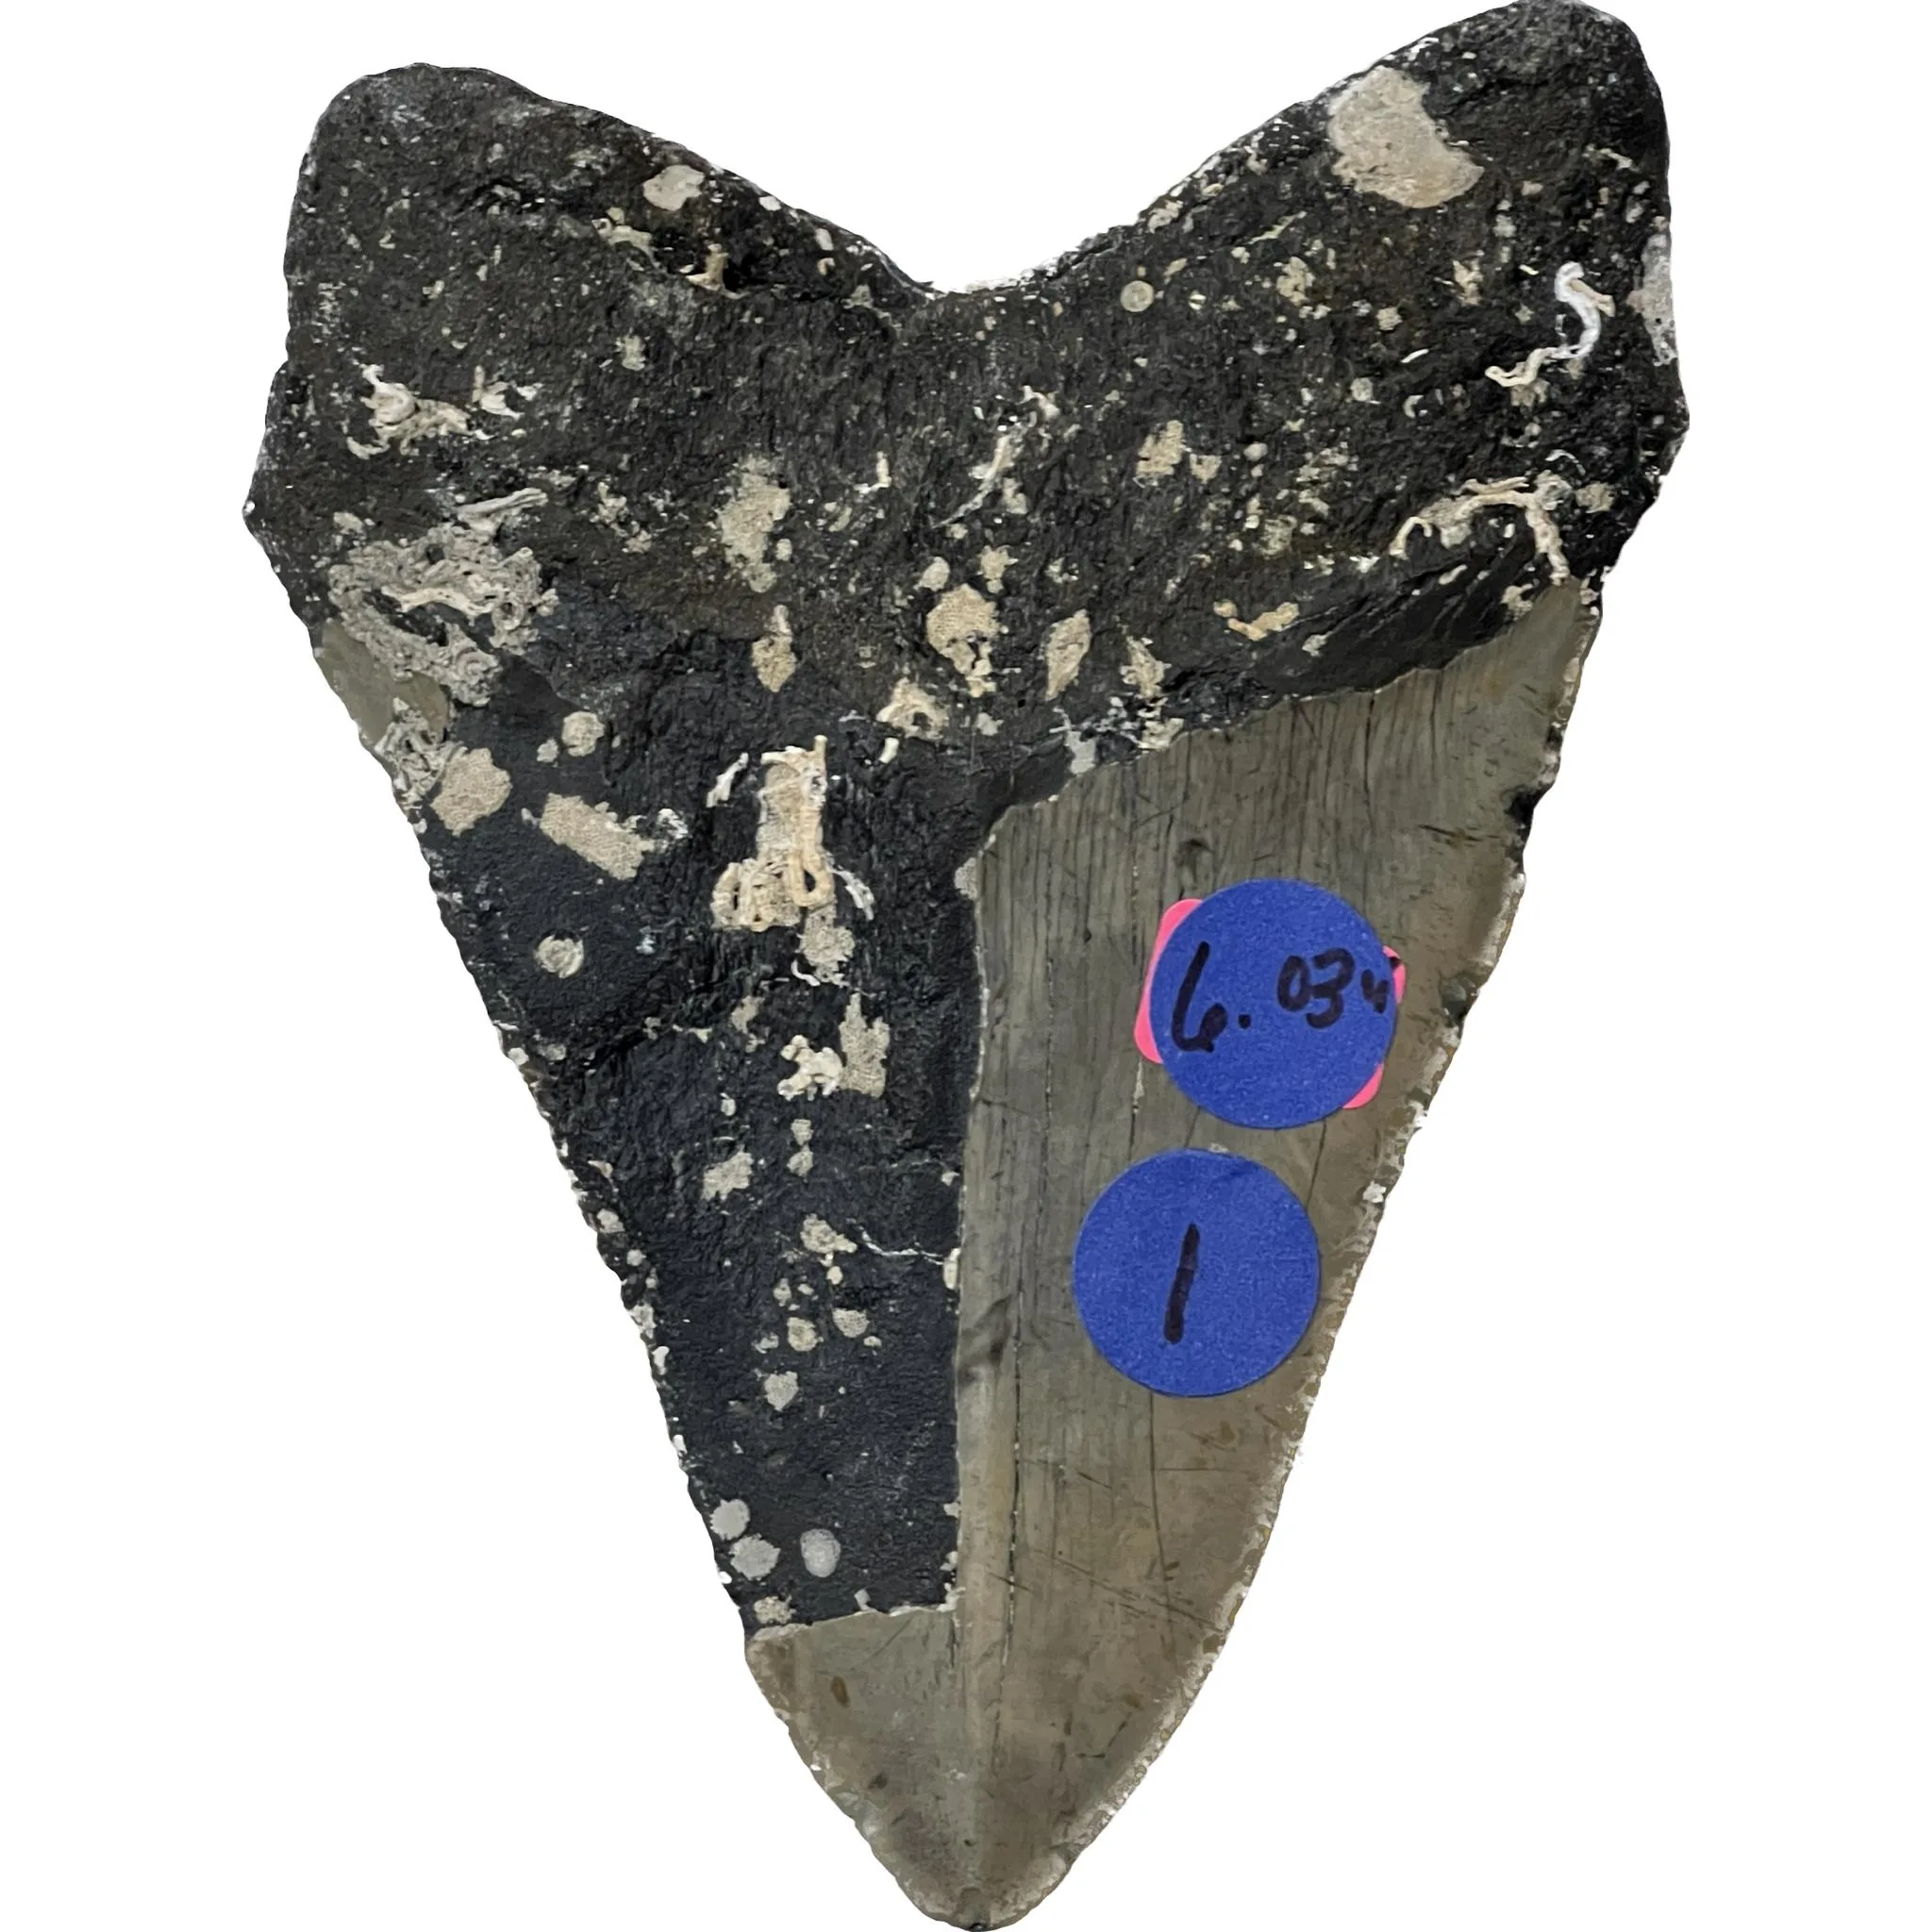 Megalodon Tooth – North Carolina – 6.03 inch, Huge Prehistoric Online